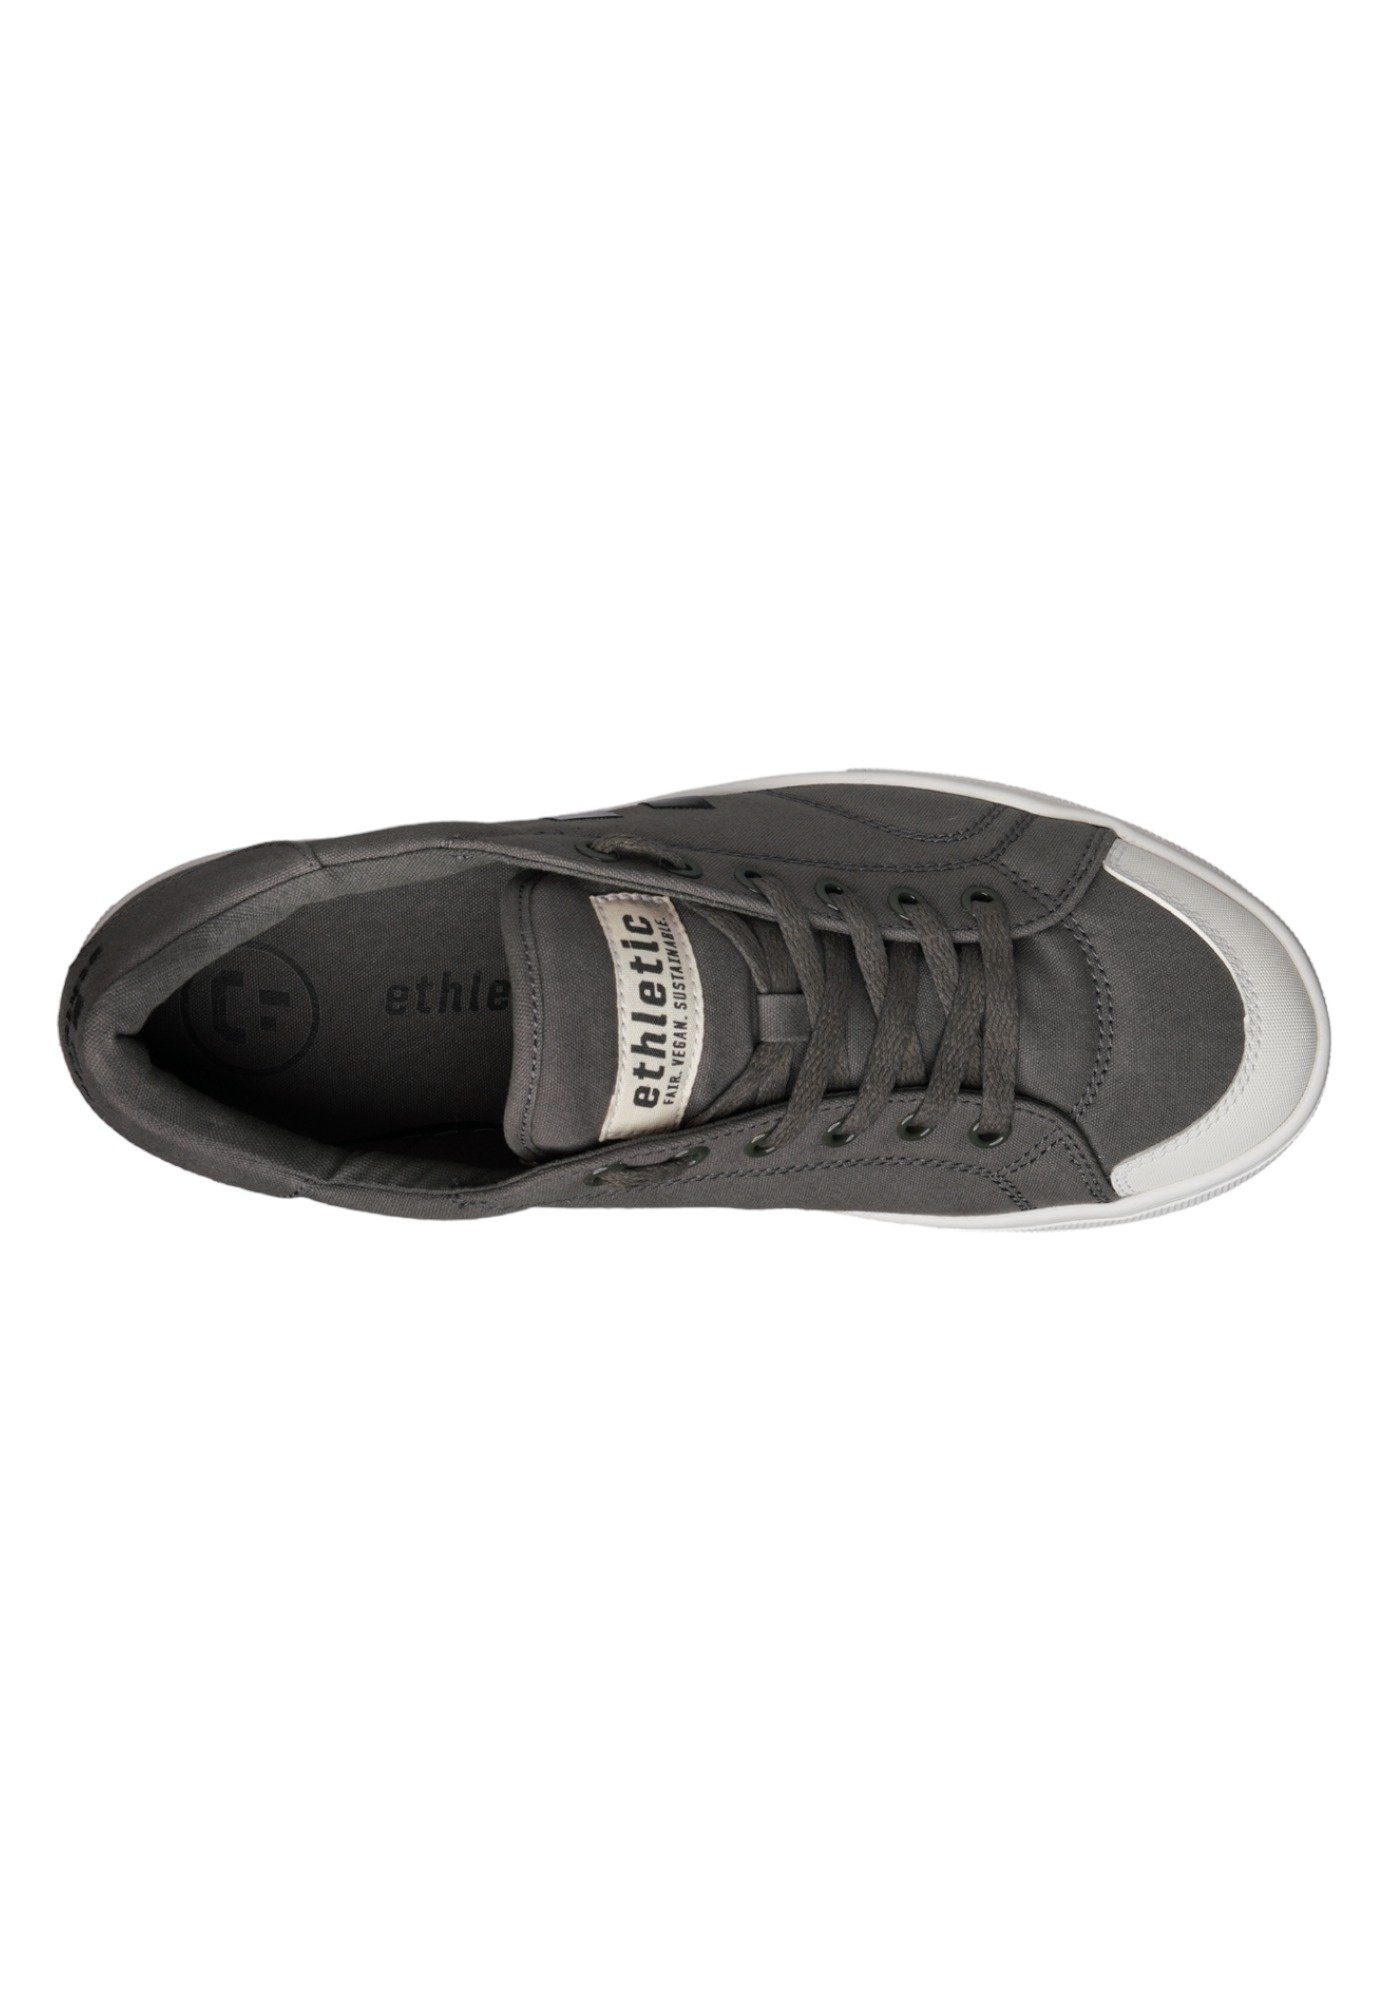 ETHLETIC Active Lo Cut Produkt Grey Sneaker Black - Fairtrade Jet Donkey